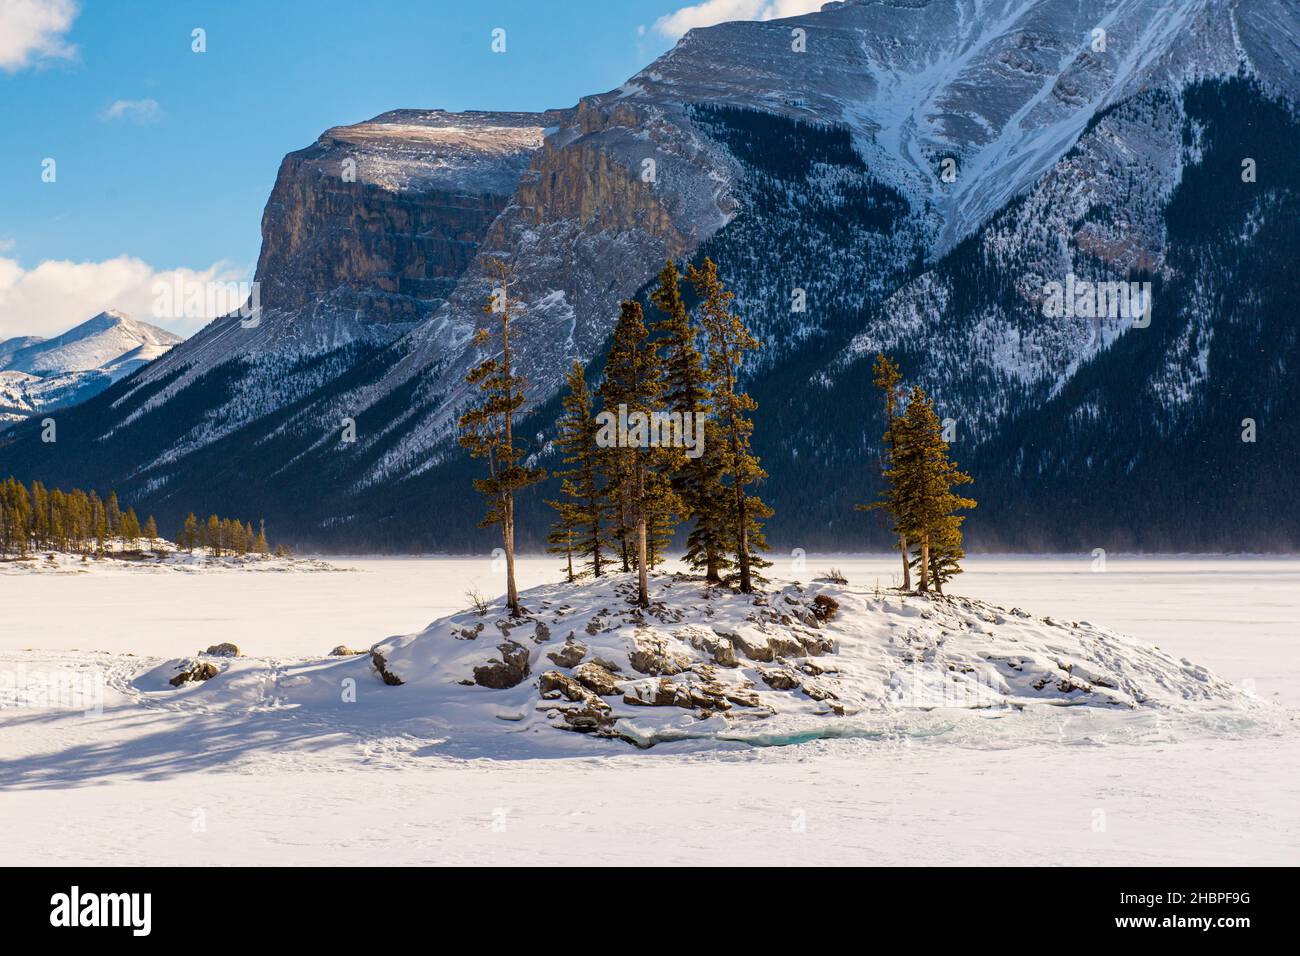 Beautiful winter views in Banff National Park Alberta Canada. Snowshoeing around a frozen lake. Stock Photo